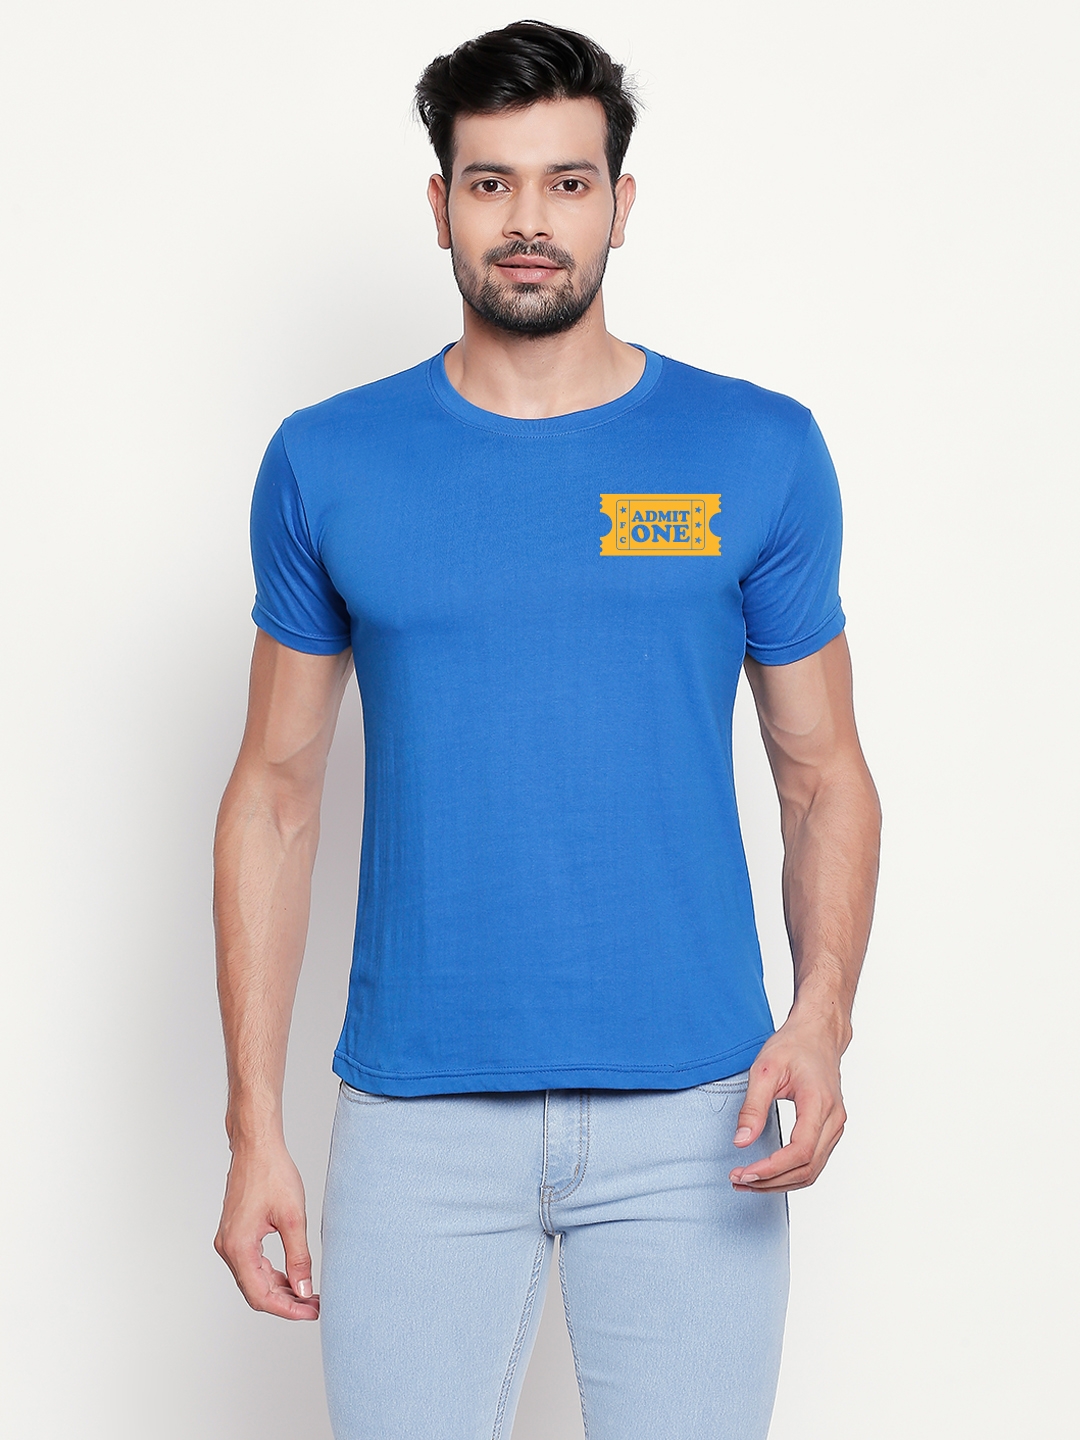 creativeideas.store | Admit One Blue Tshirt